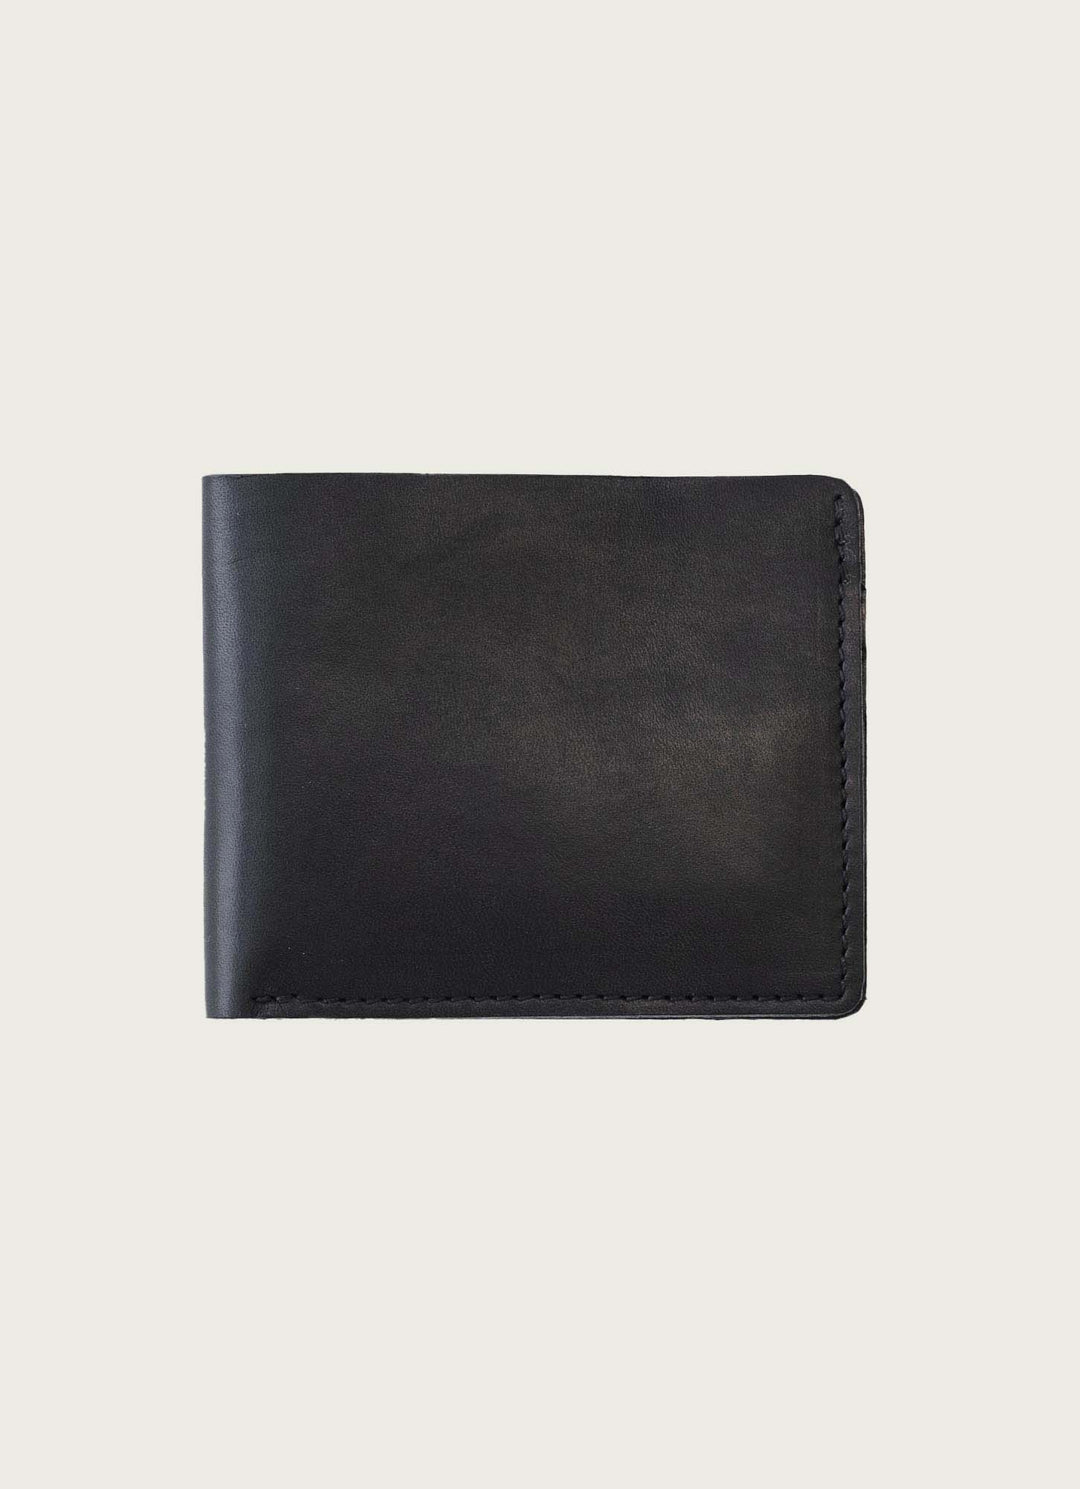 WP Standard - Leather Bifold Wallet for Men: Tan